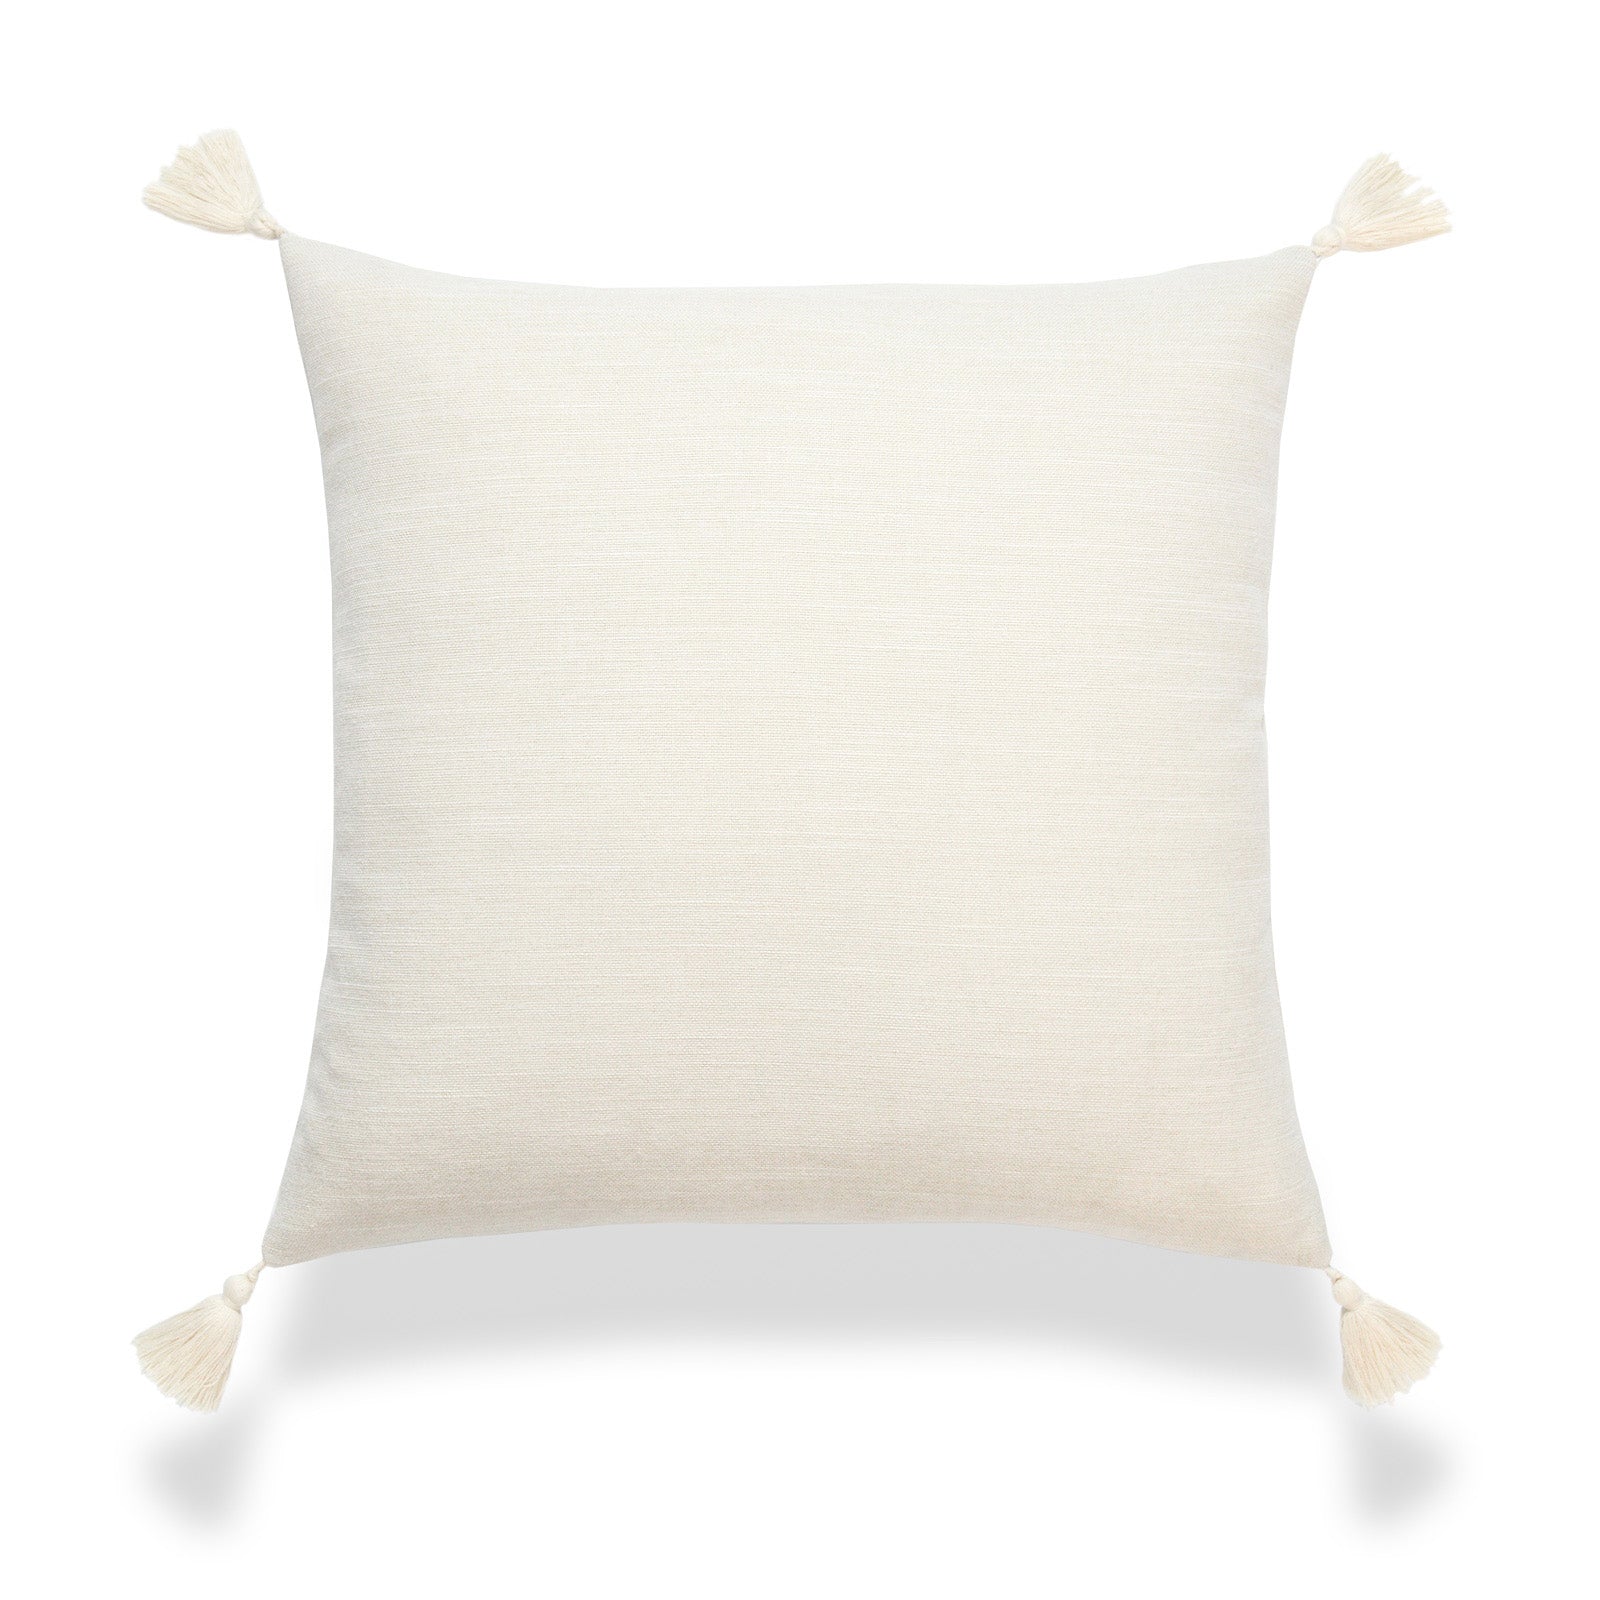 Neutral Throw Pillow Cover, Beige Plain With Tassels, 18"x18"